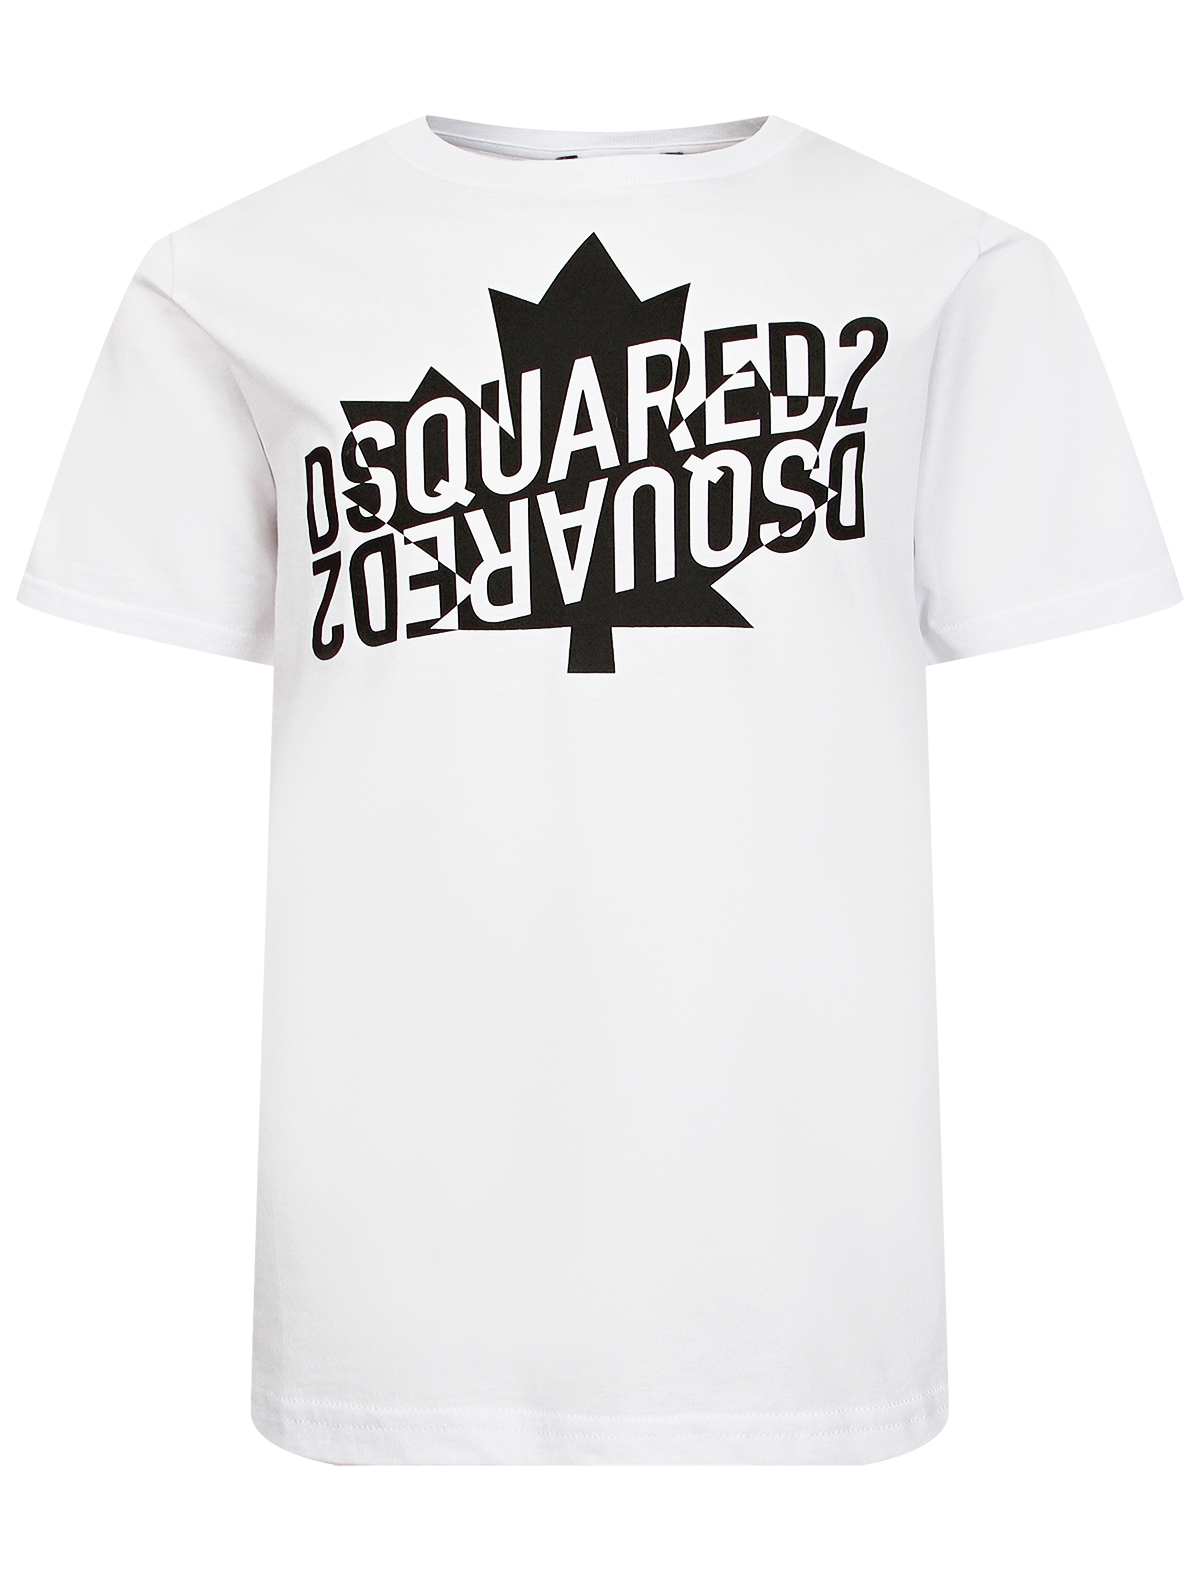 футболка dsquared2 для мальчика, белая